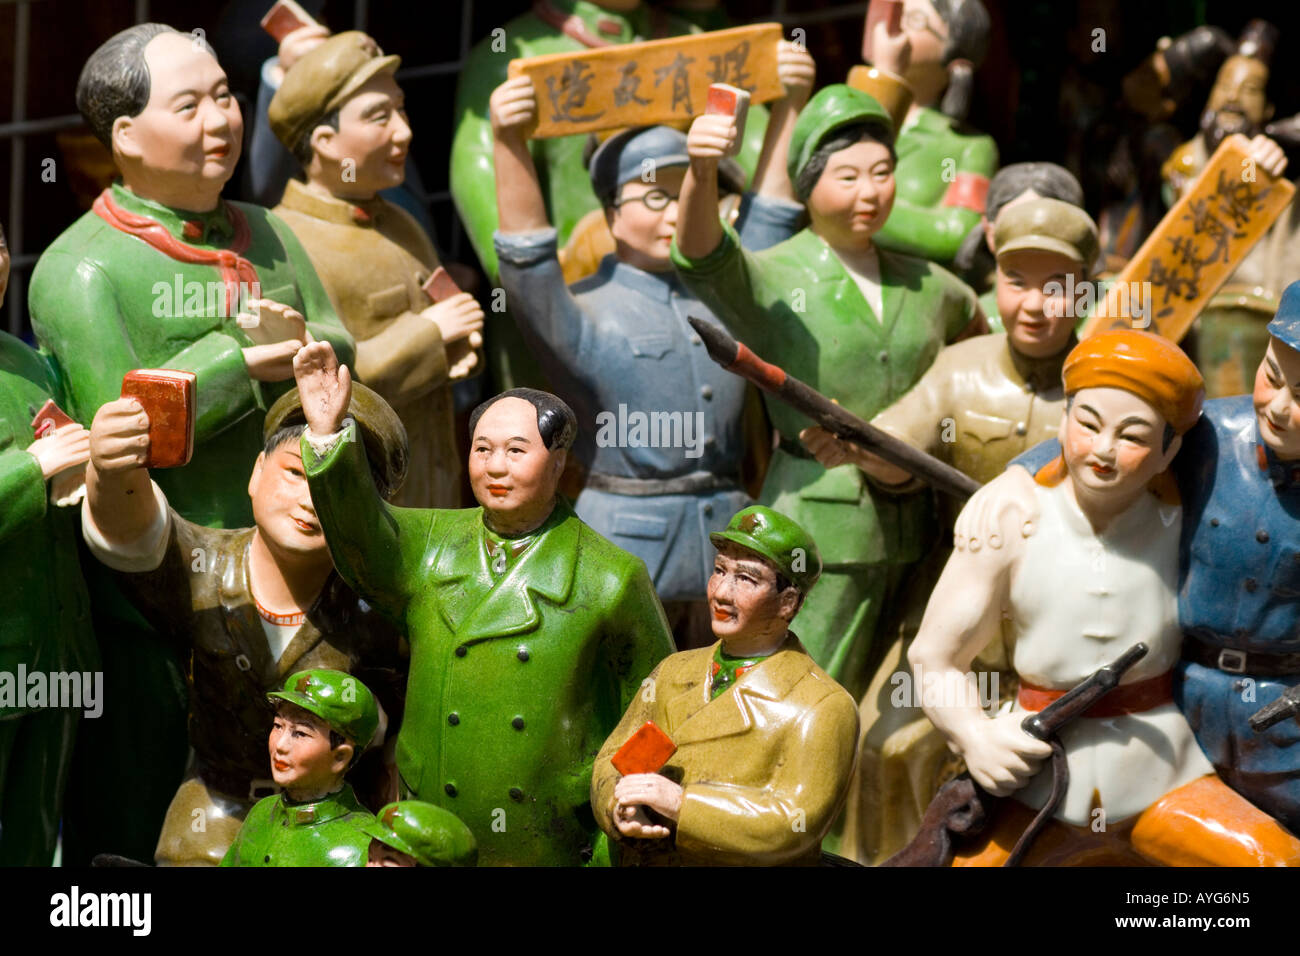 Ceramica di Souvenir Mao e altre figure comunista, Cat Street antico mercato di Hong Kong Foto Stock